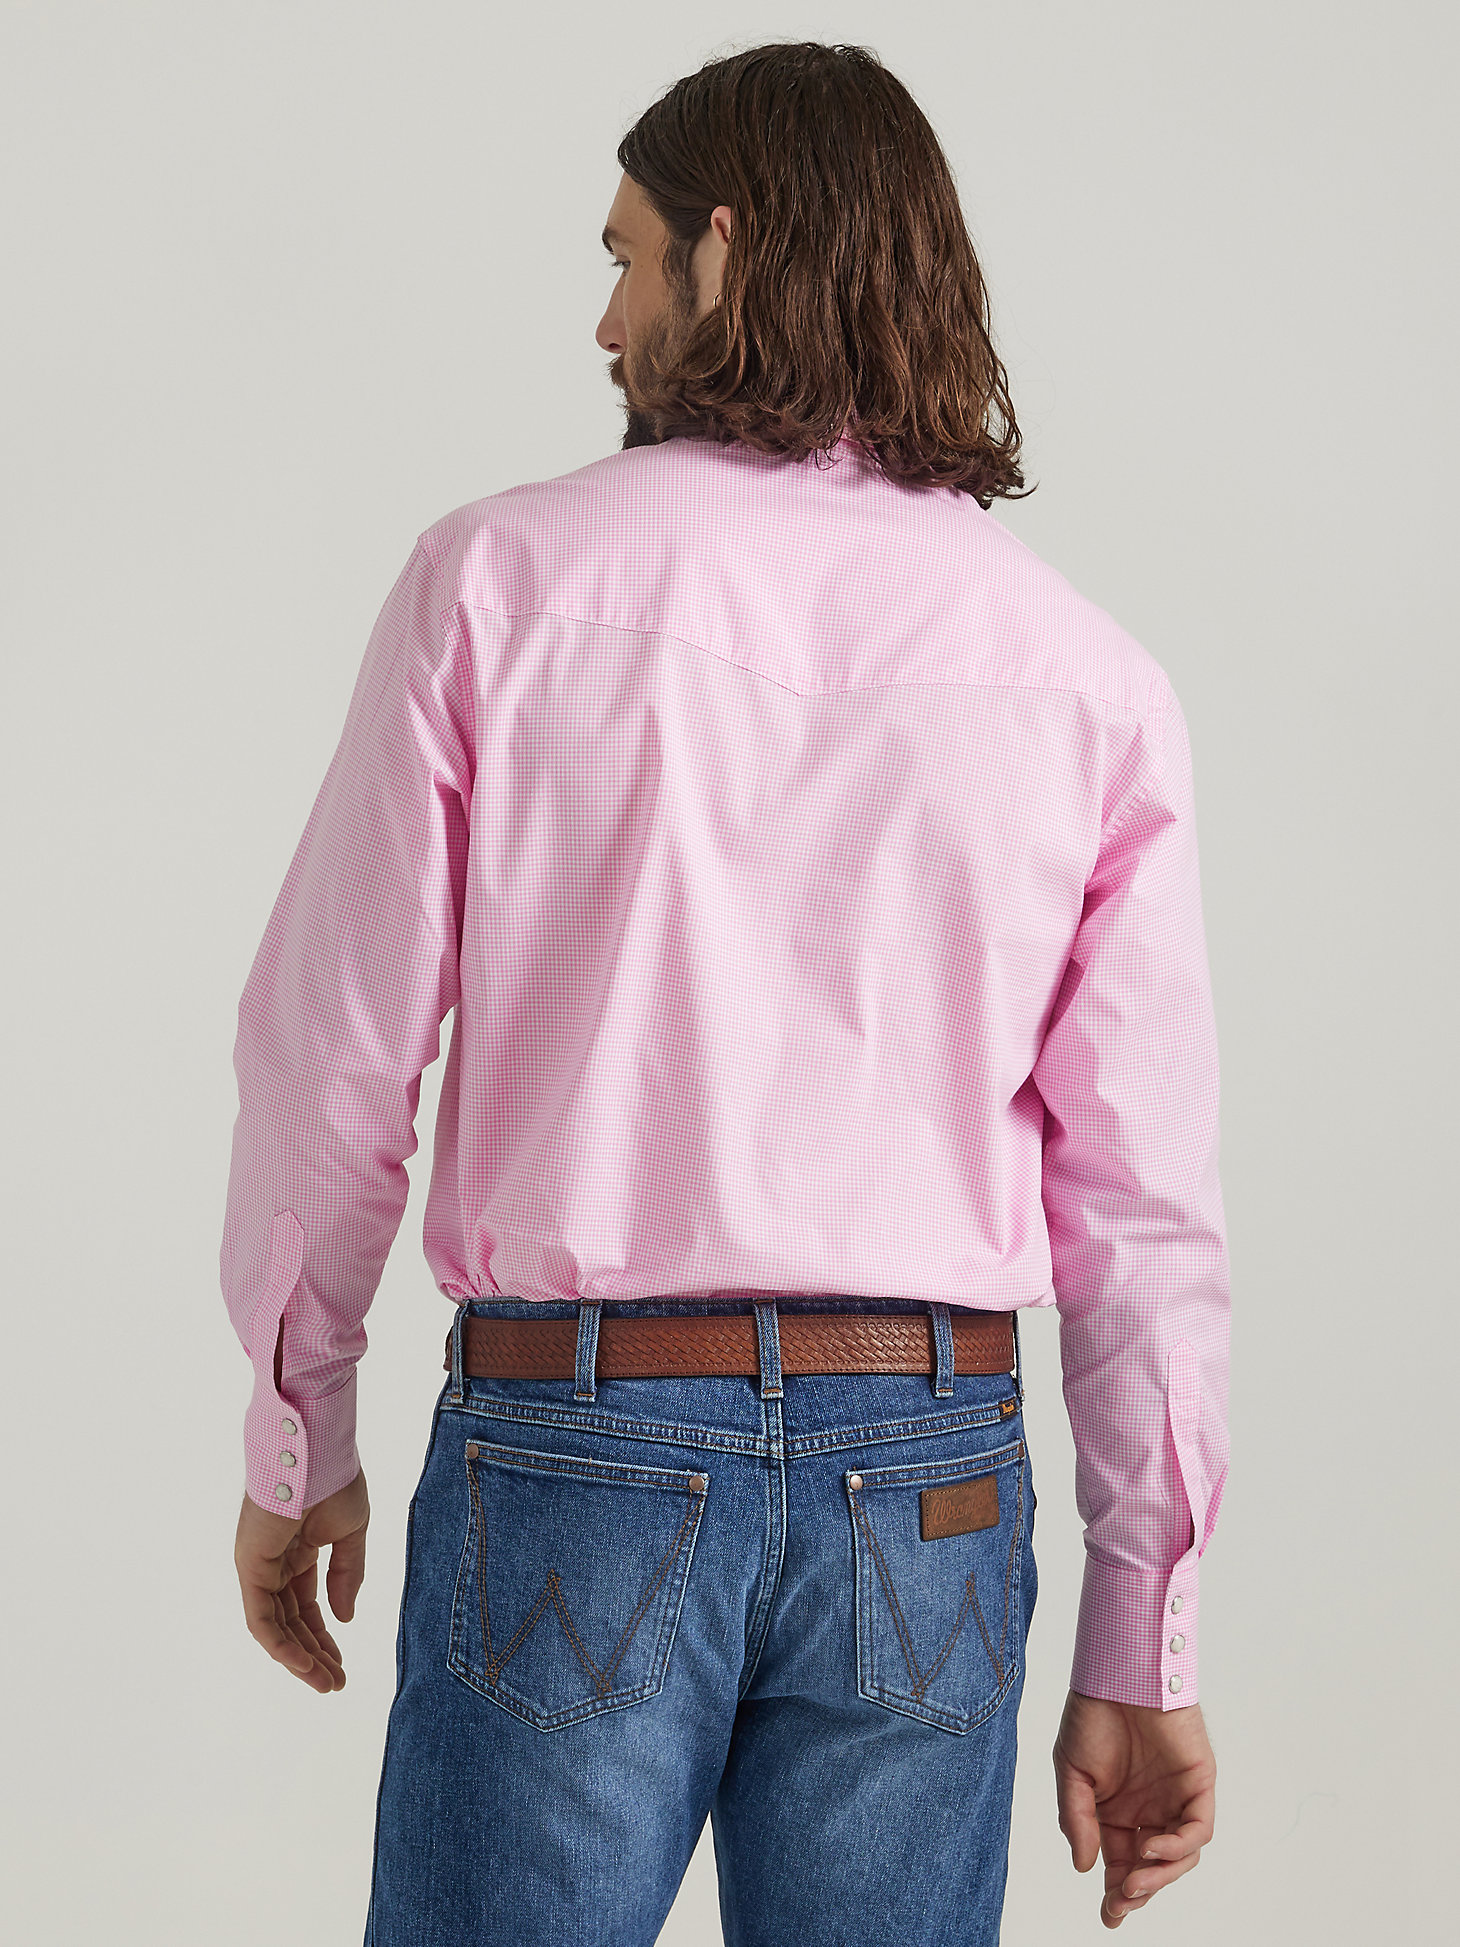 Men's Wrangler Bucking Cancer Snap Shirt in Fuschia Pink alternative view 1